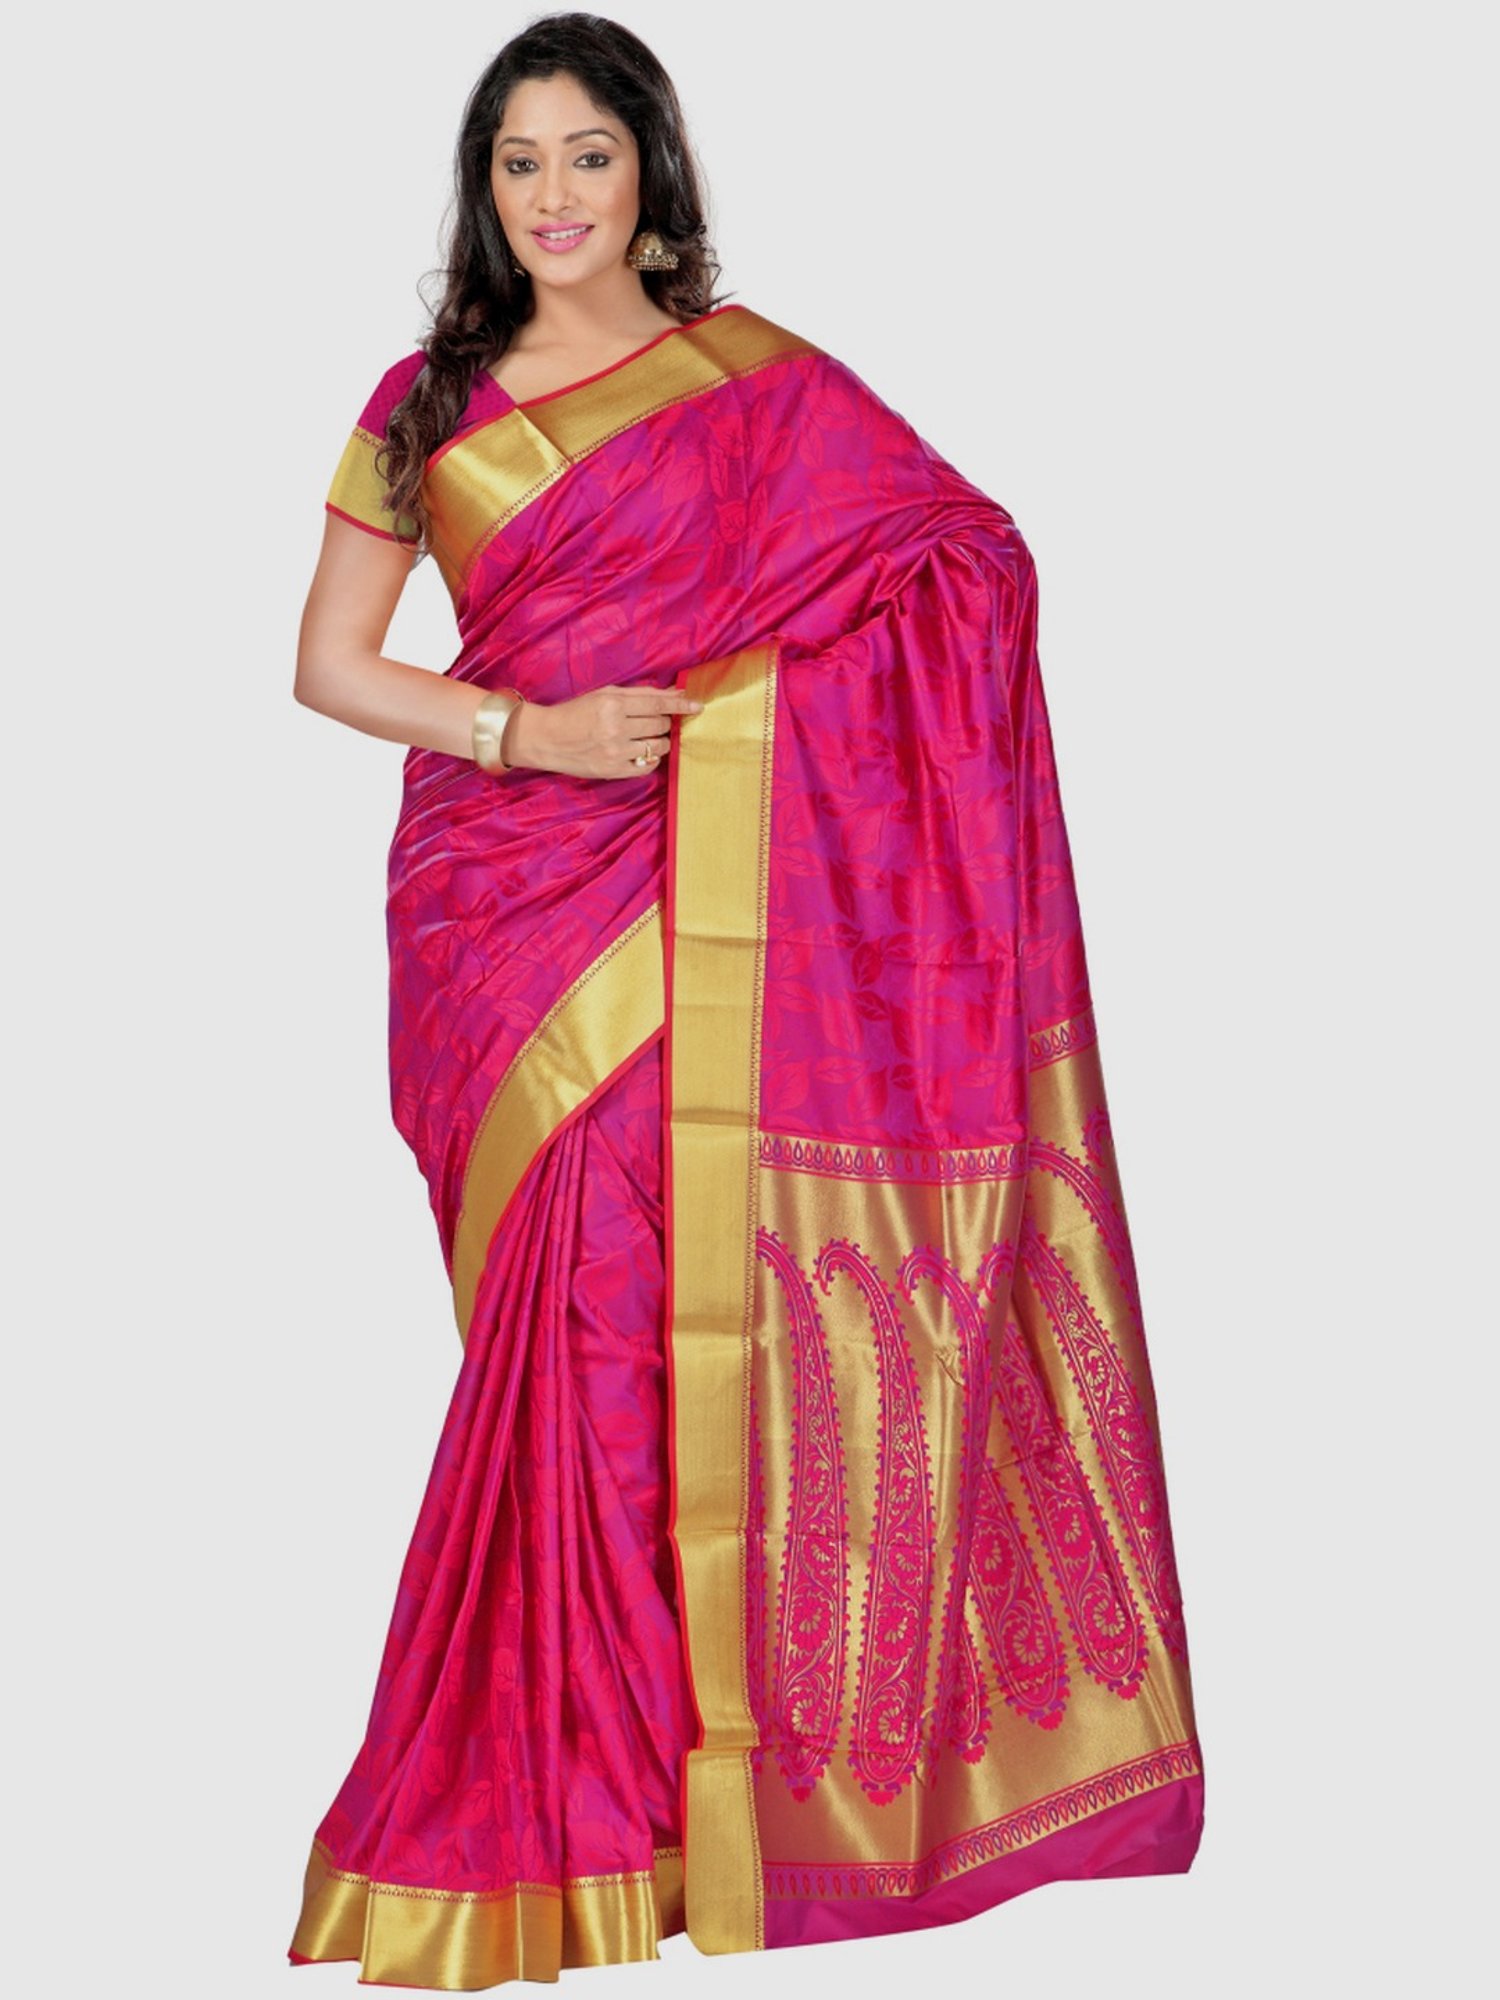 Buy Varkala Silk Palace Women's shubh Vasttram Kanchipuram Banarasi Lichi Silk  Saree With blouse piece (red colour) at Amazon.in